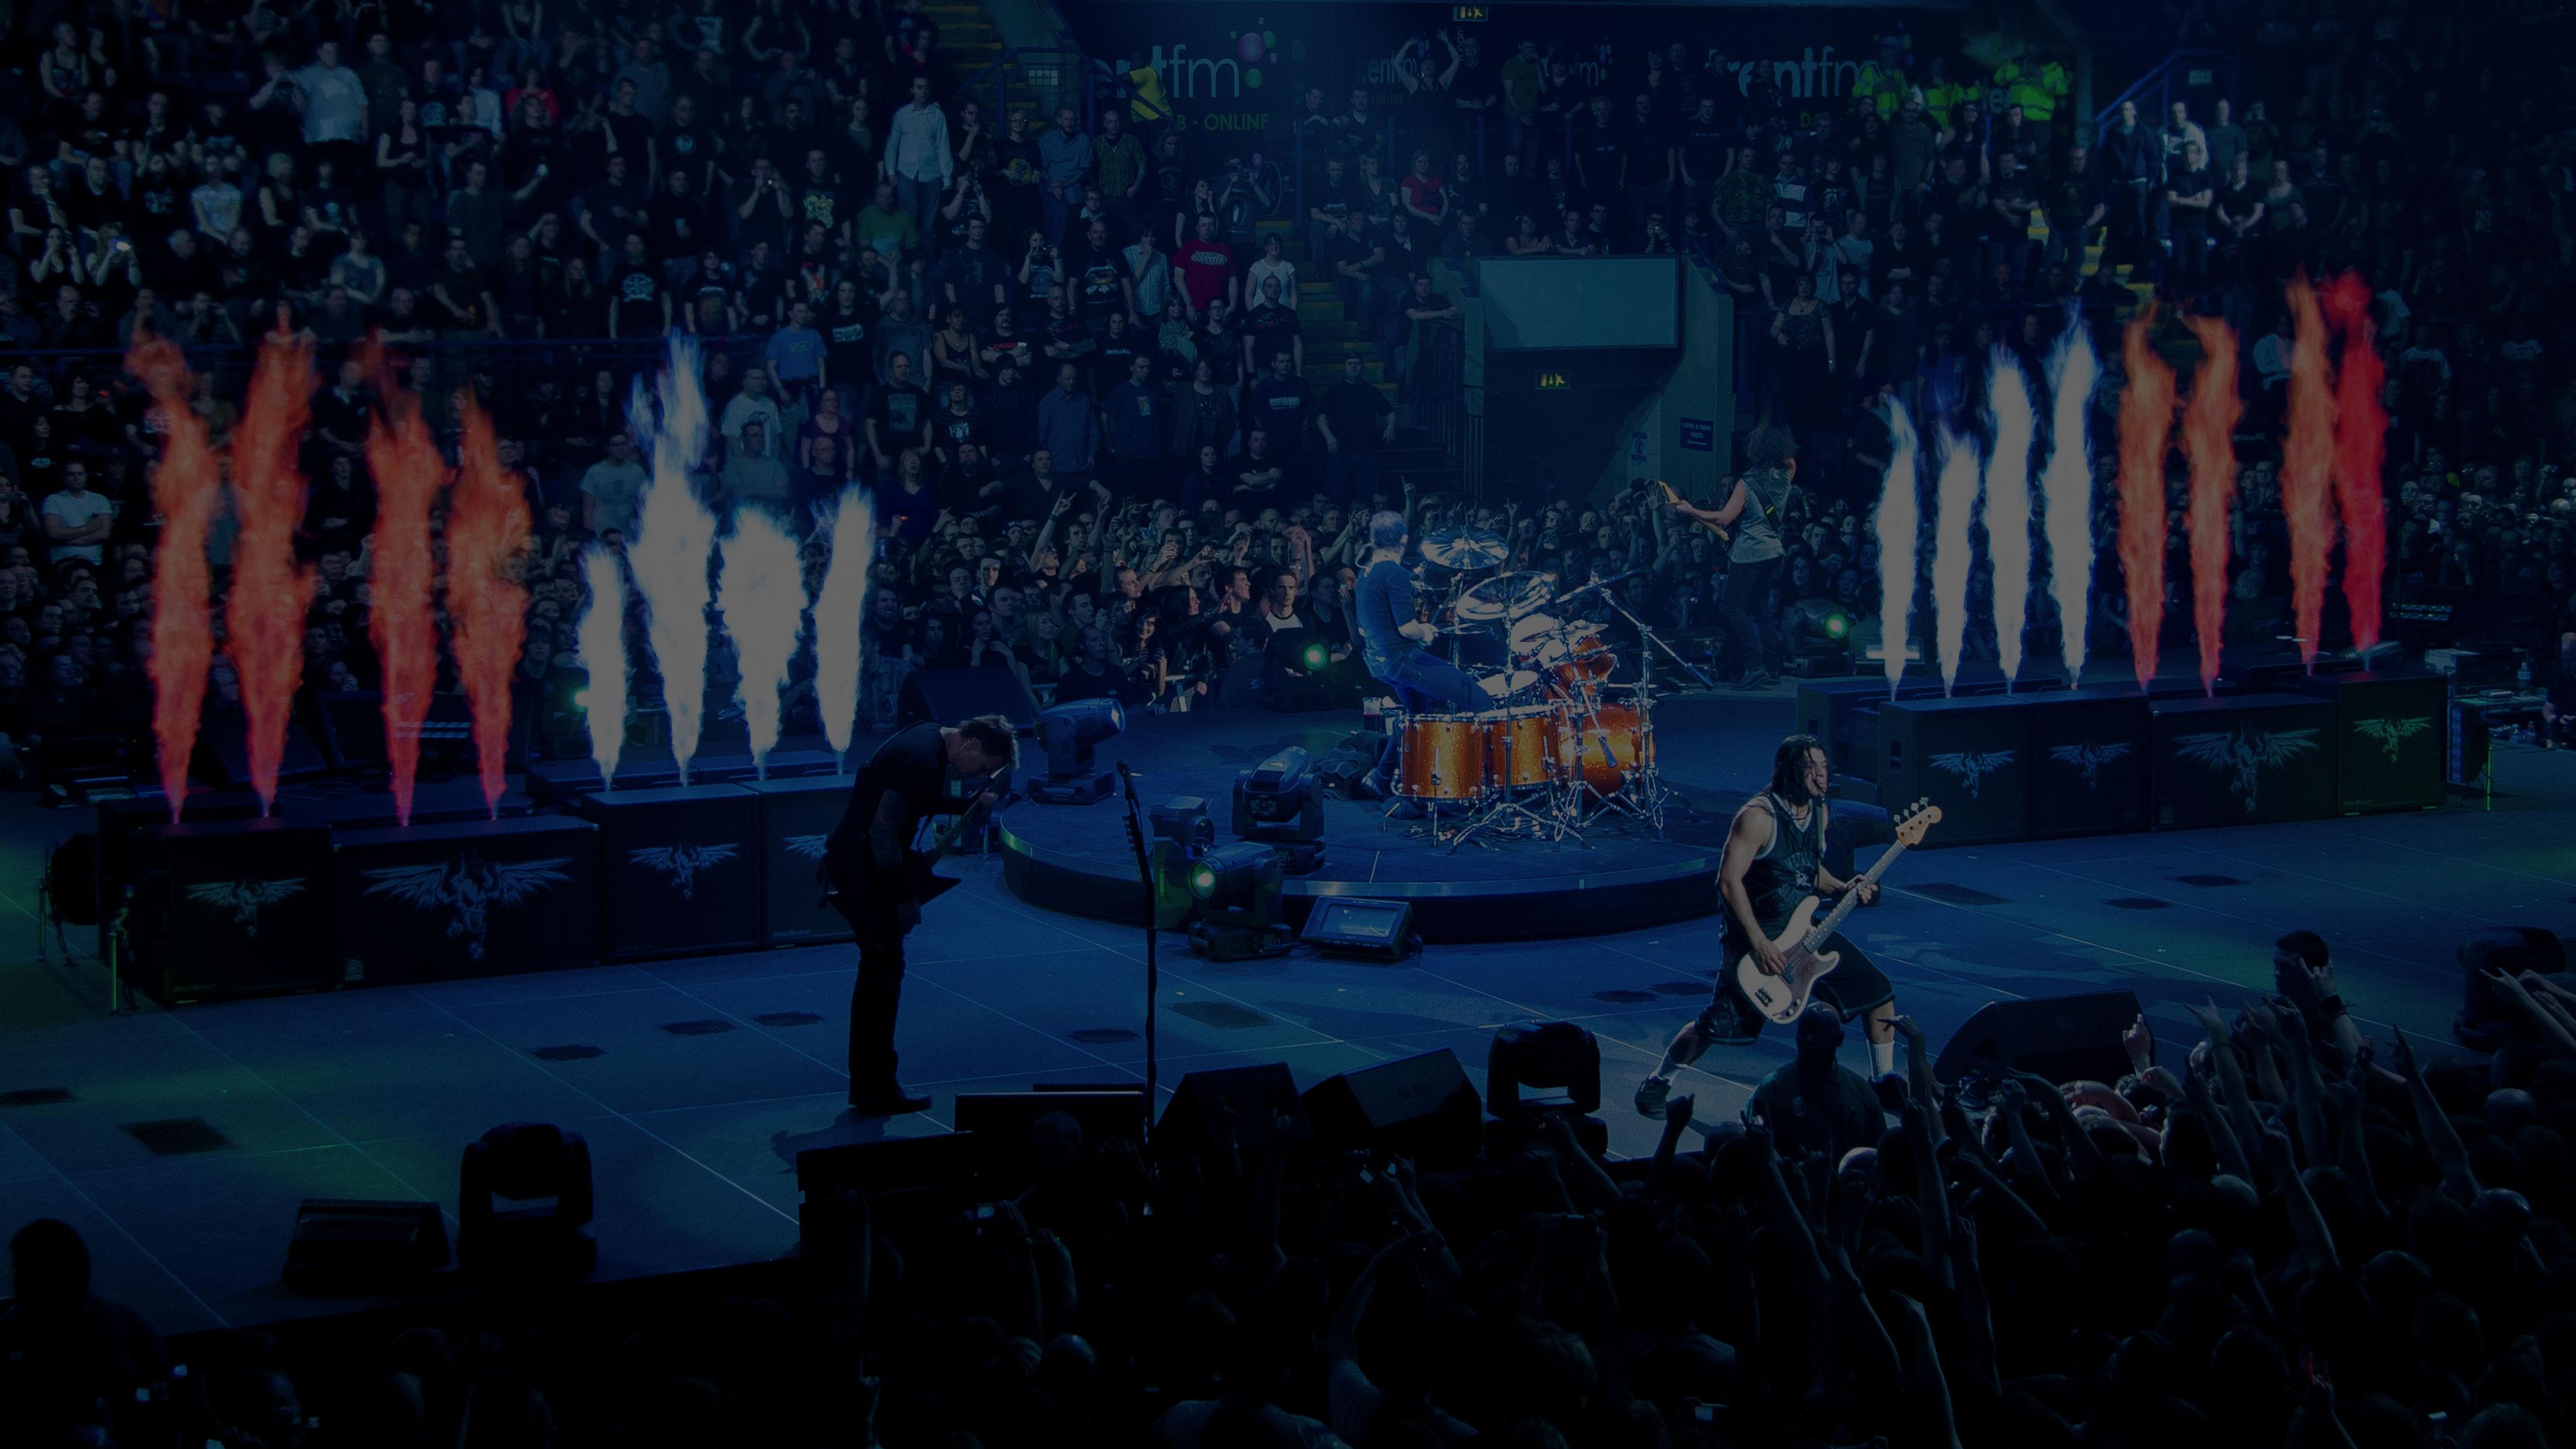 Metallica at Trent FM Arena in Nottingham, England on February 25, 2009